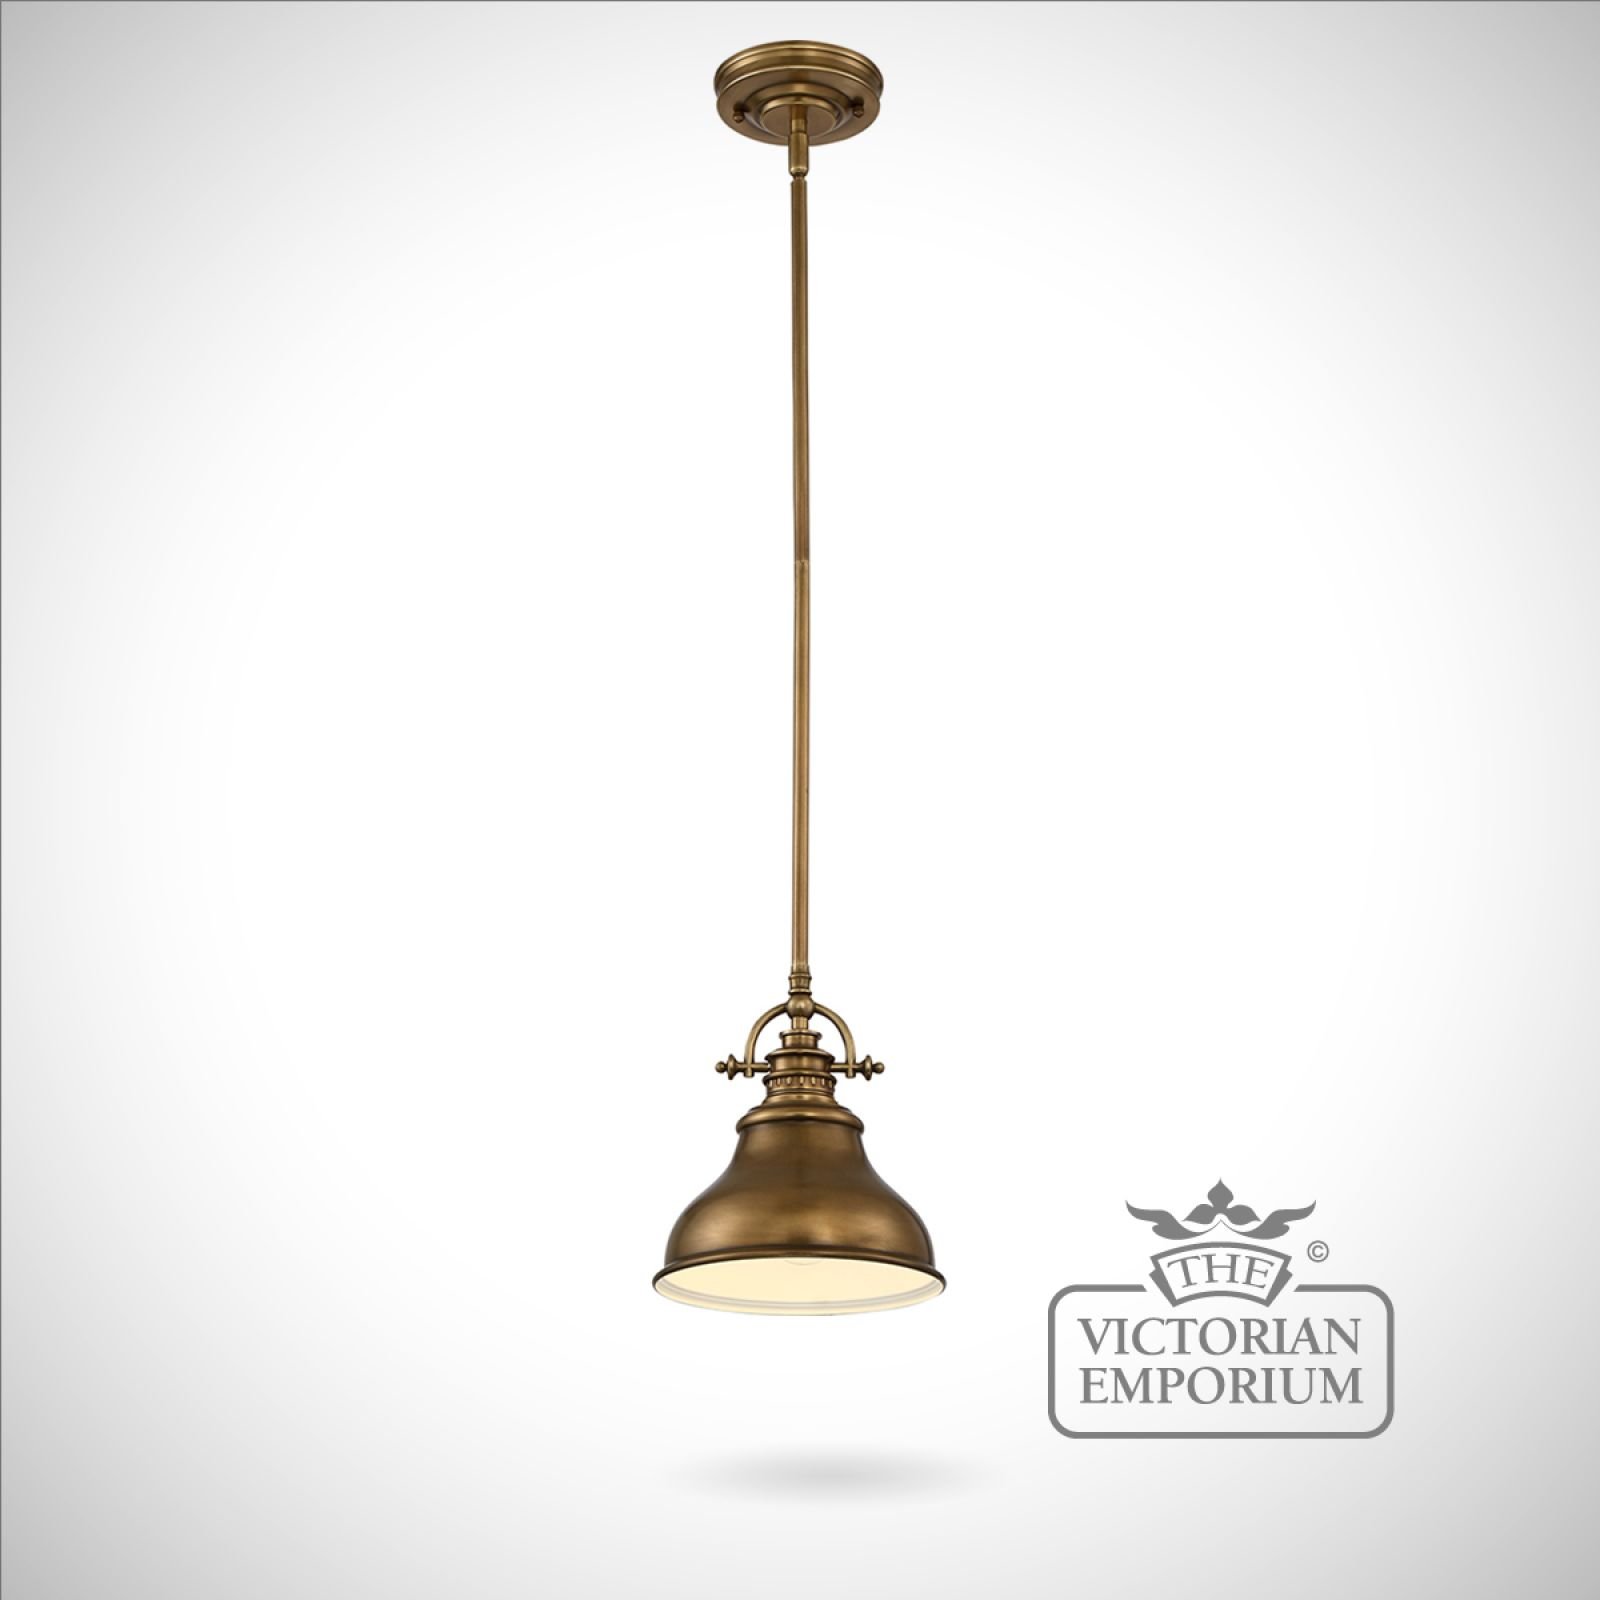 Emerey single mini pendant light in Weathered Brass